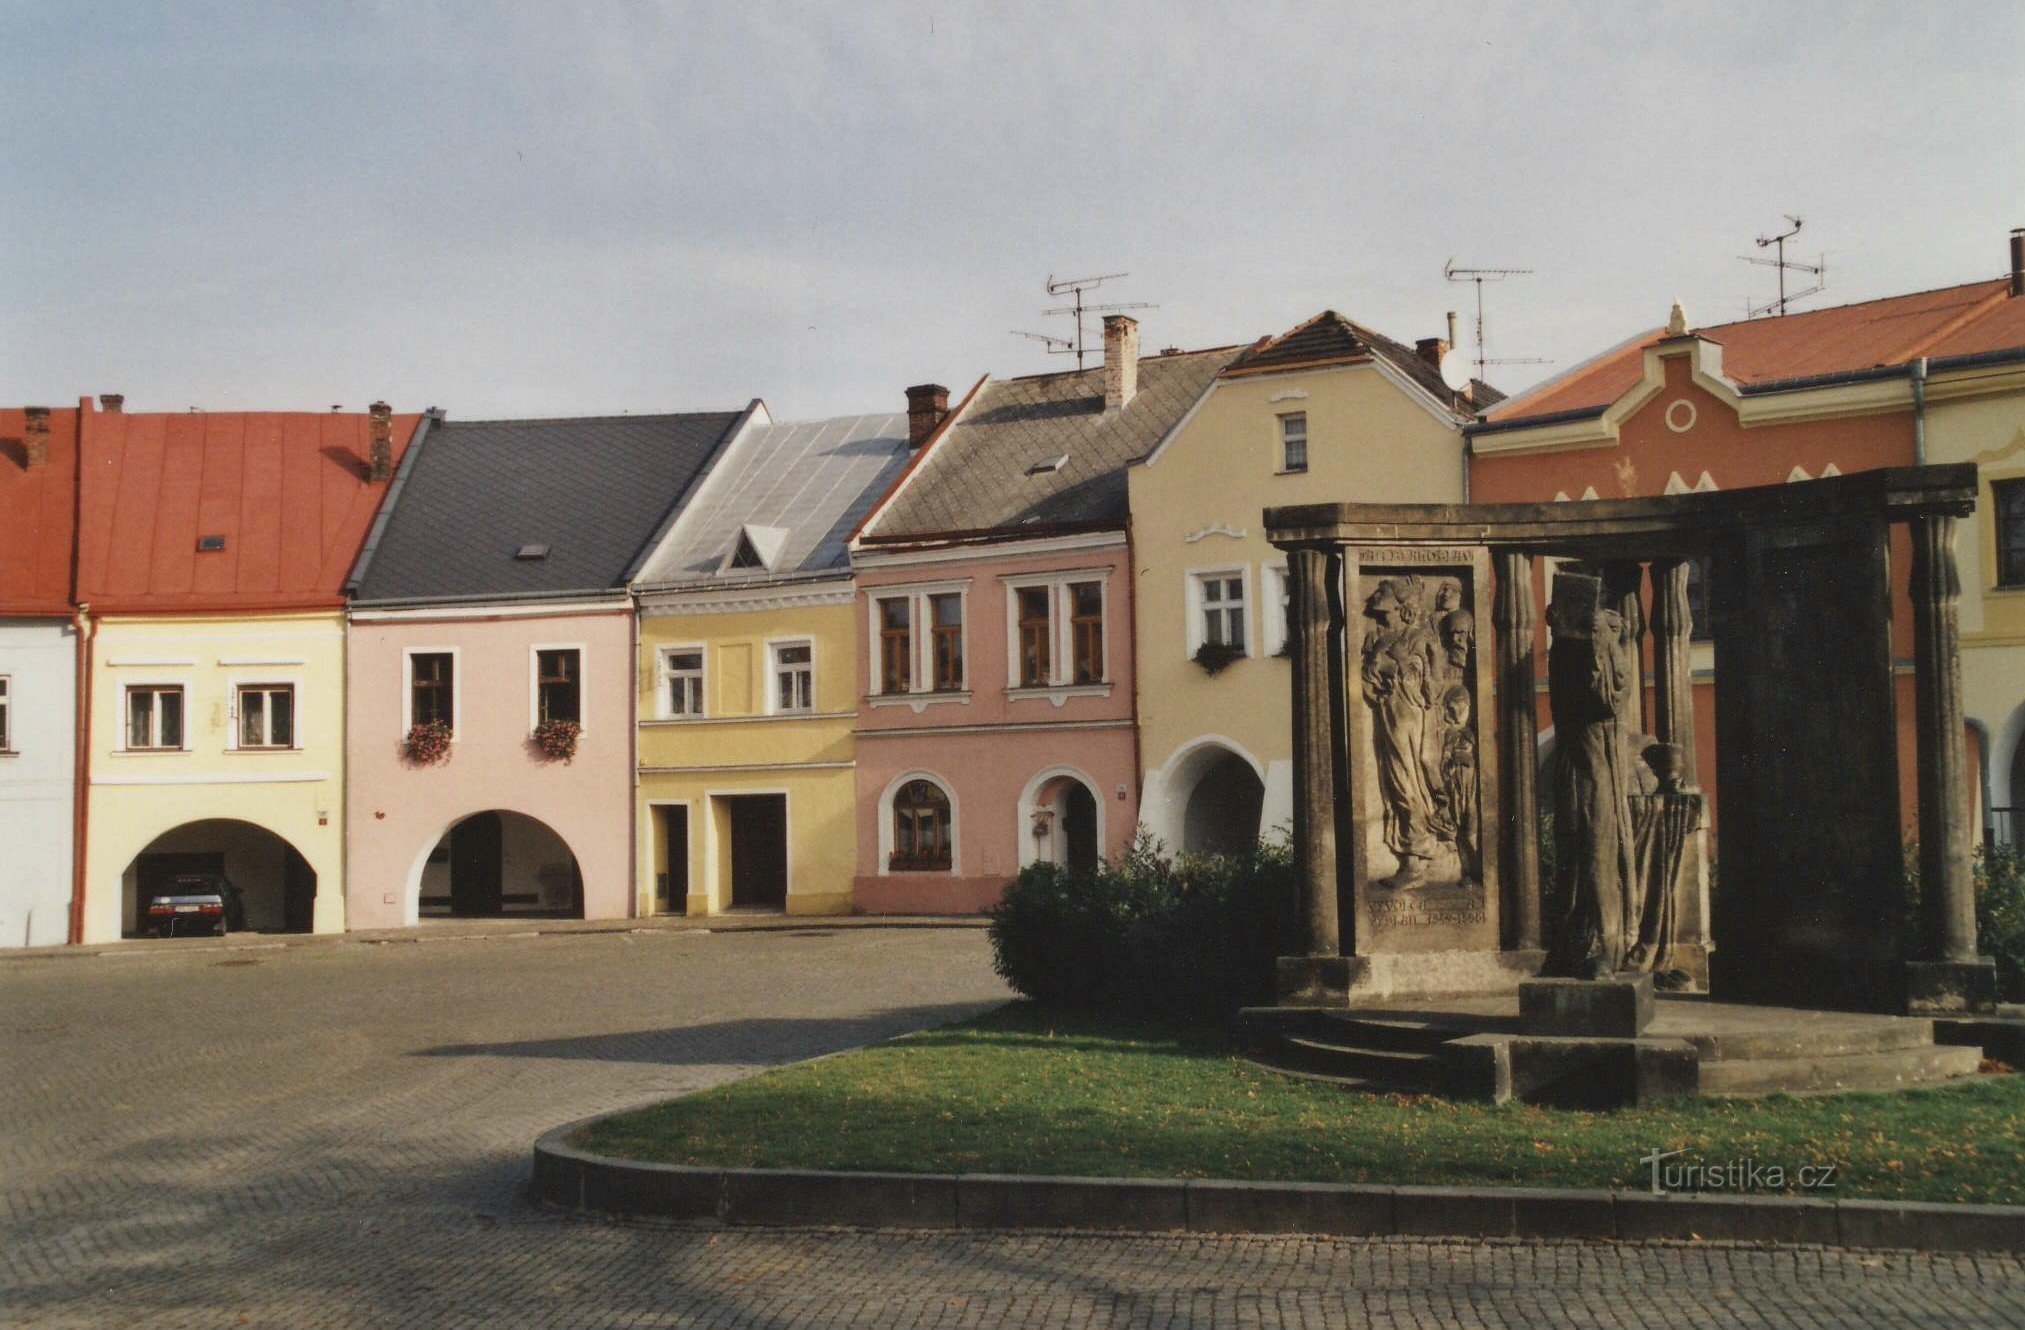 上广场和 Jan Blahoslav 纪念碑以及 Kralicka 圣经